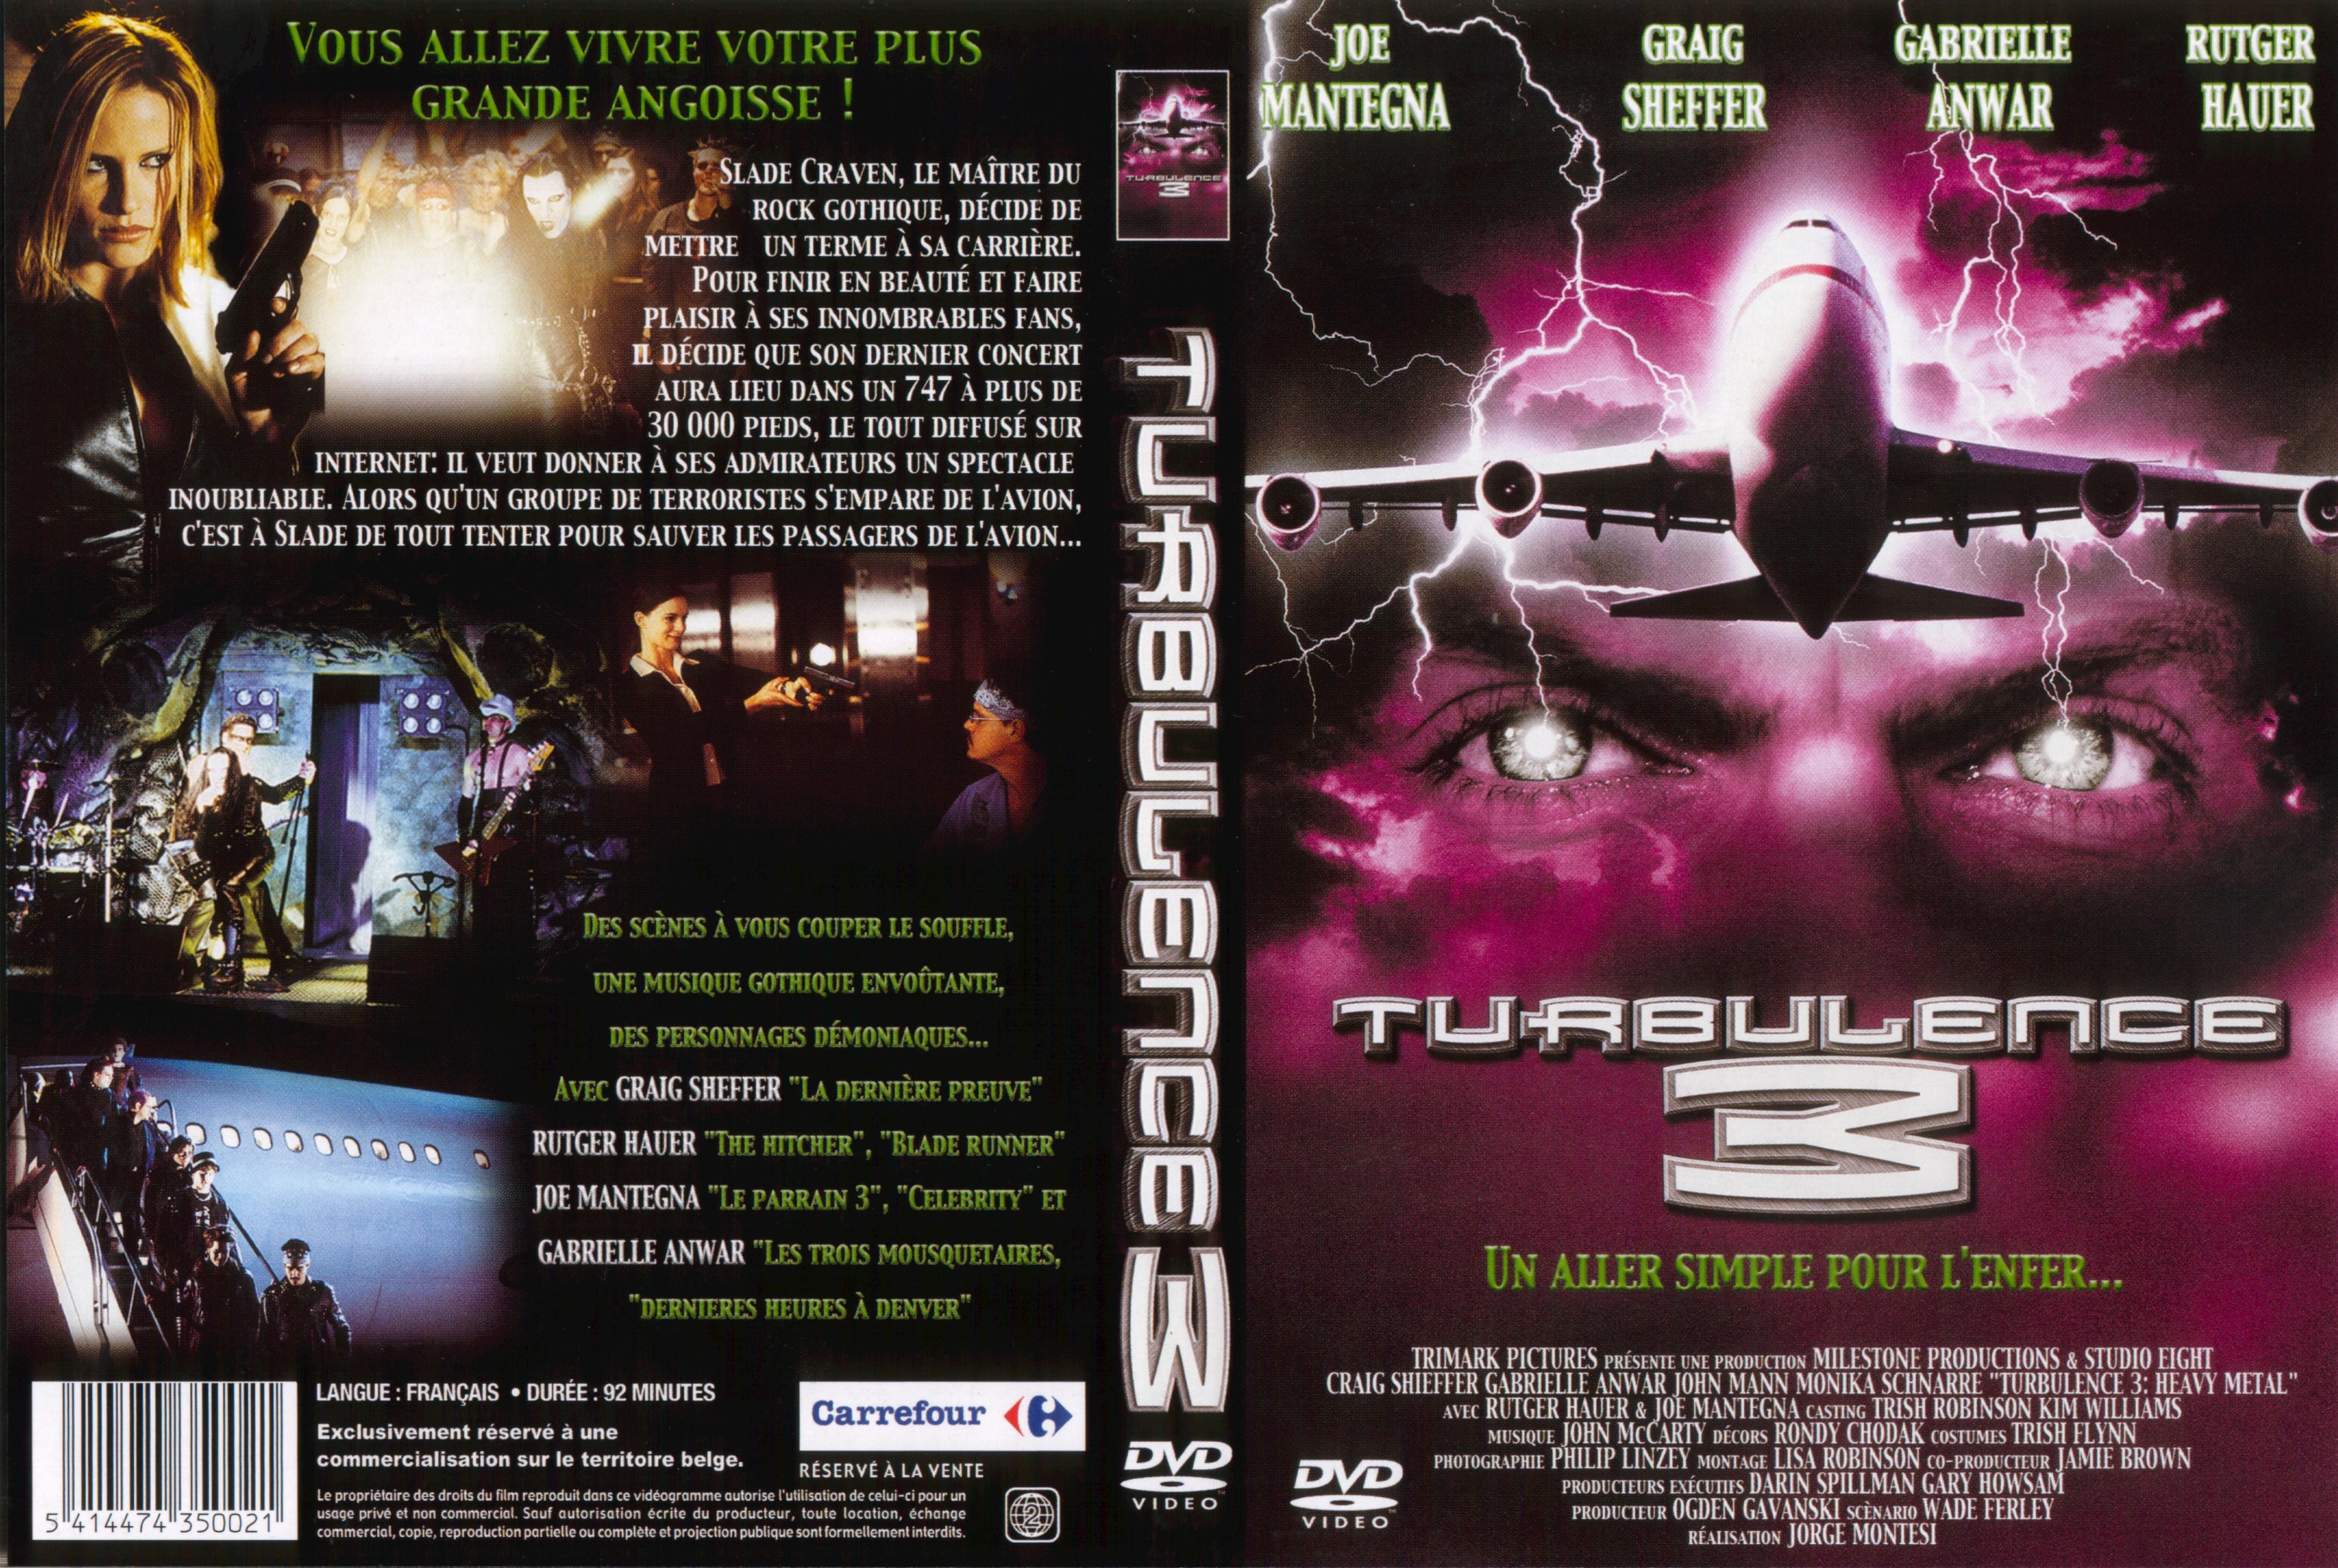 Jaquette DVD Turbulence 3